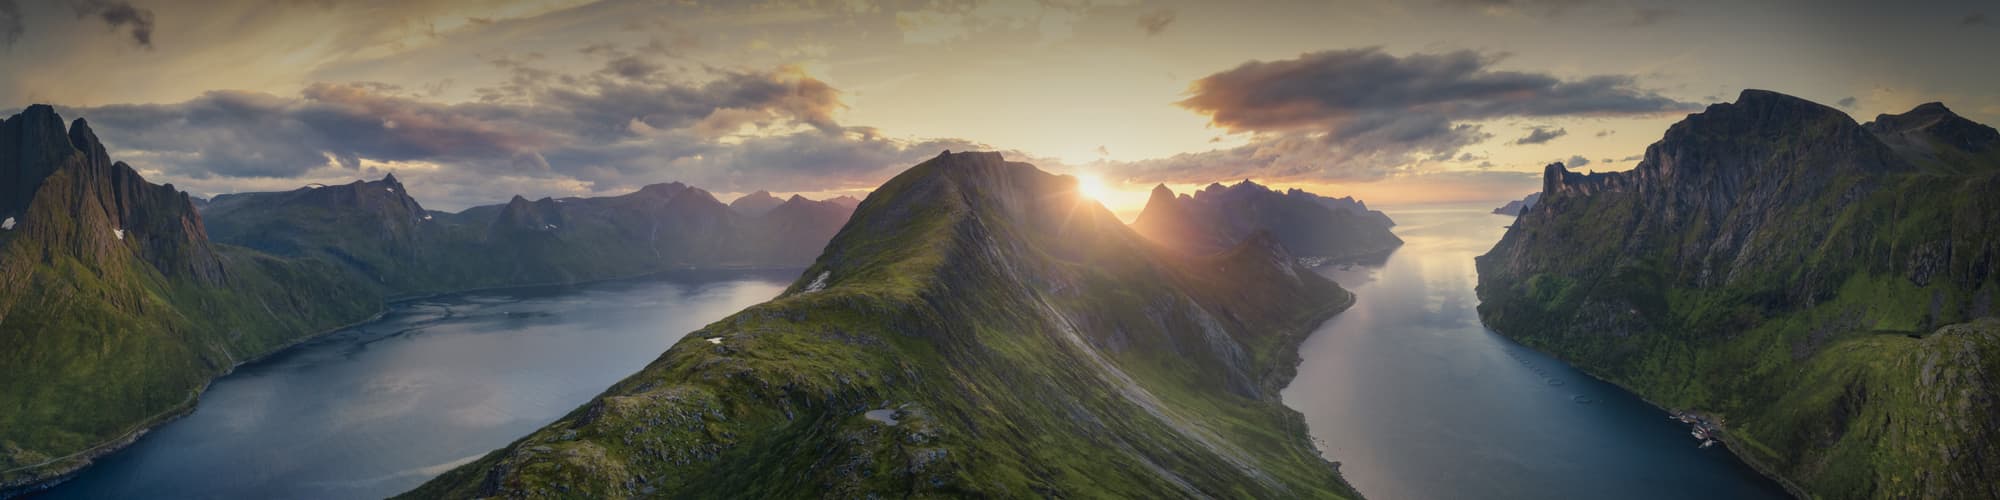 Randonnée aux Lofoten : trek et voyage © Lars Böske / Adobe Stock